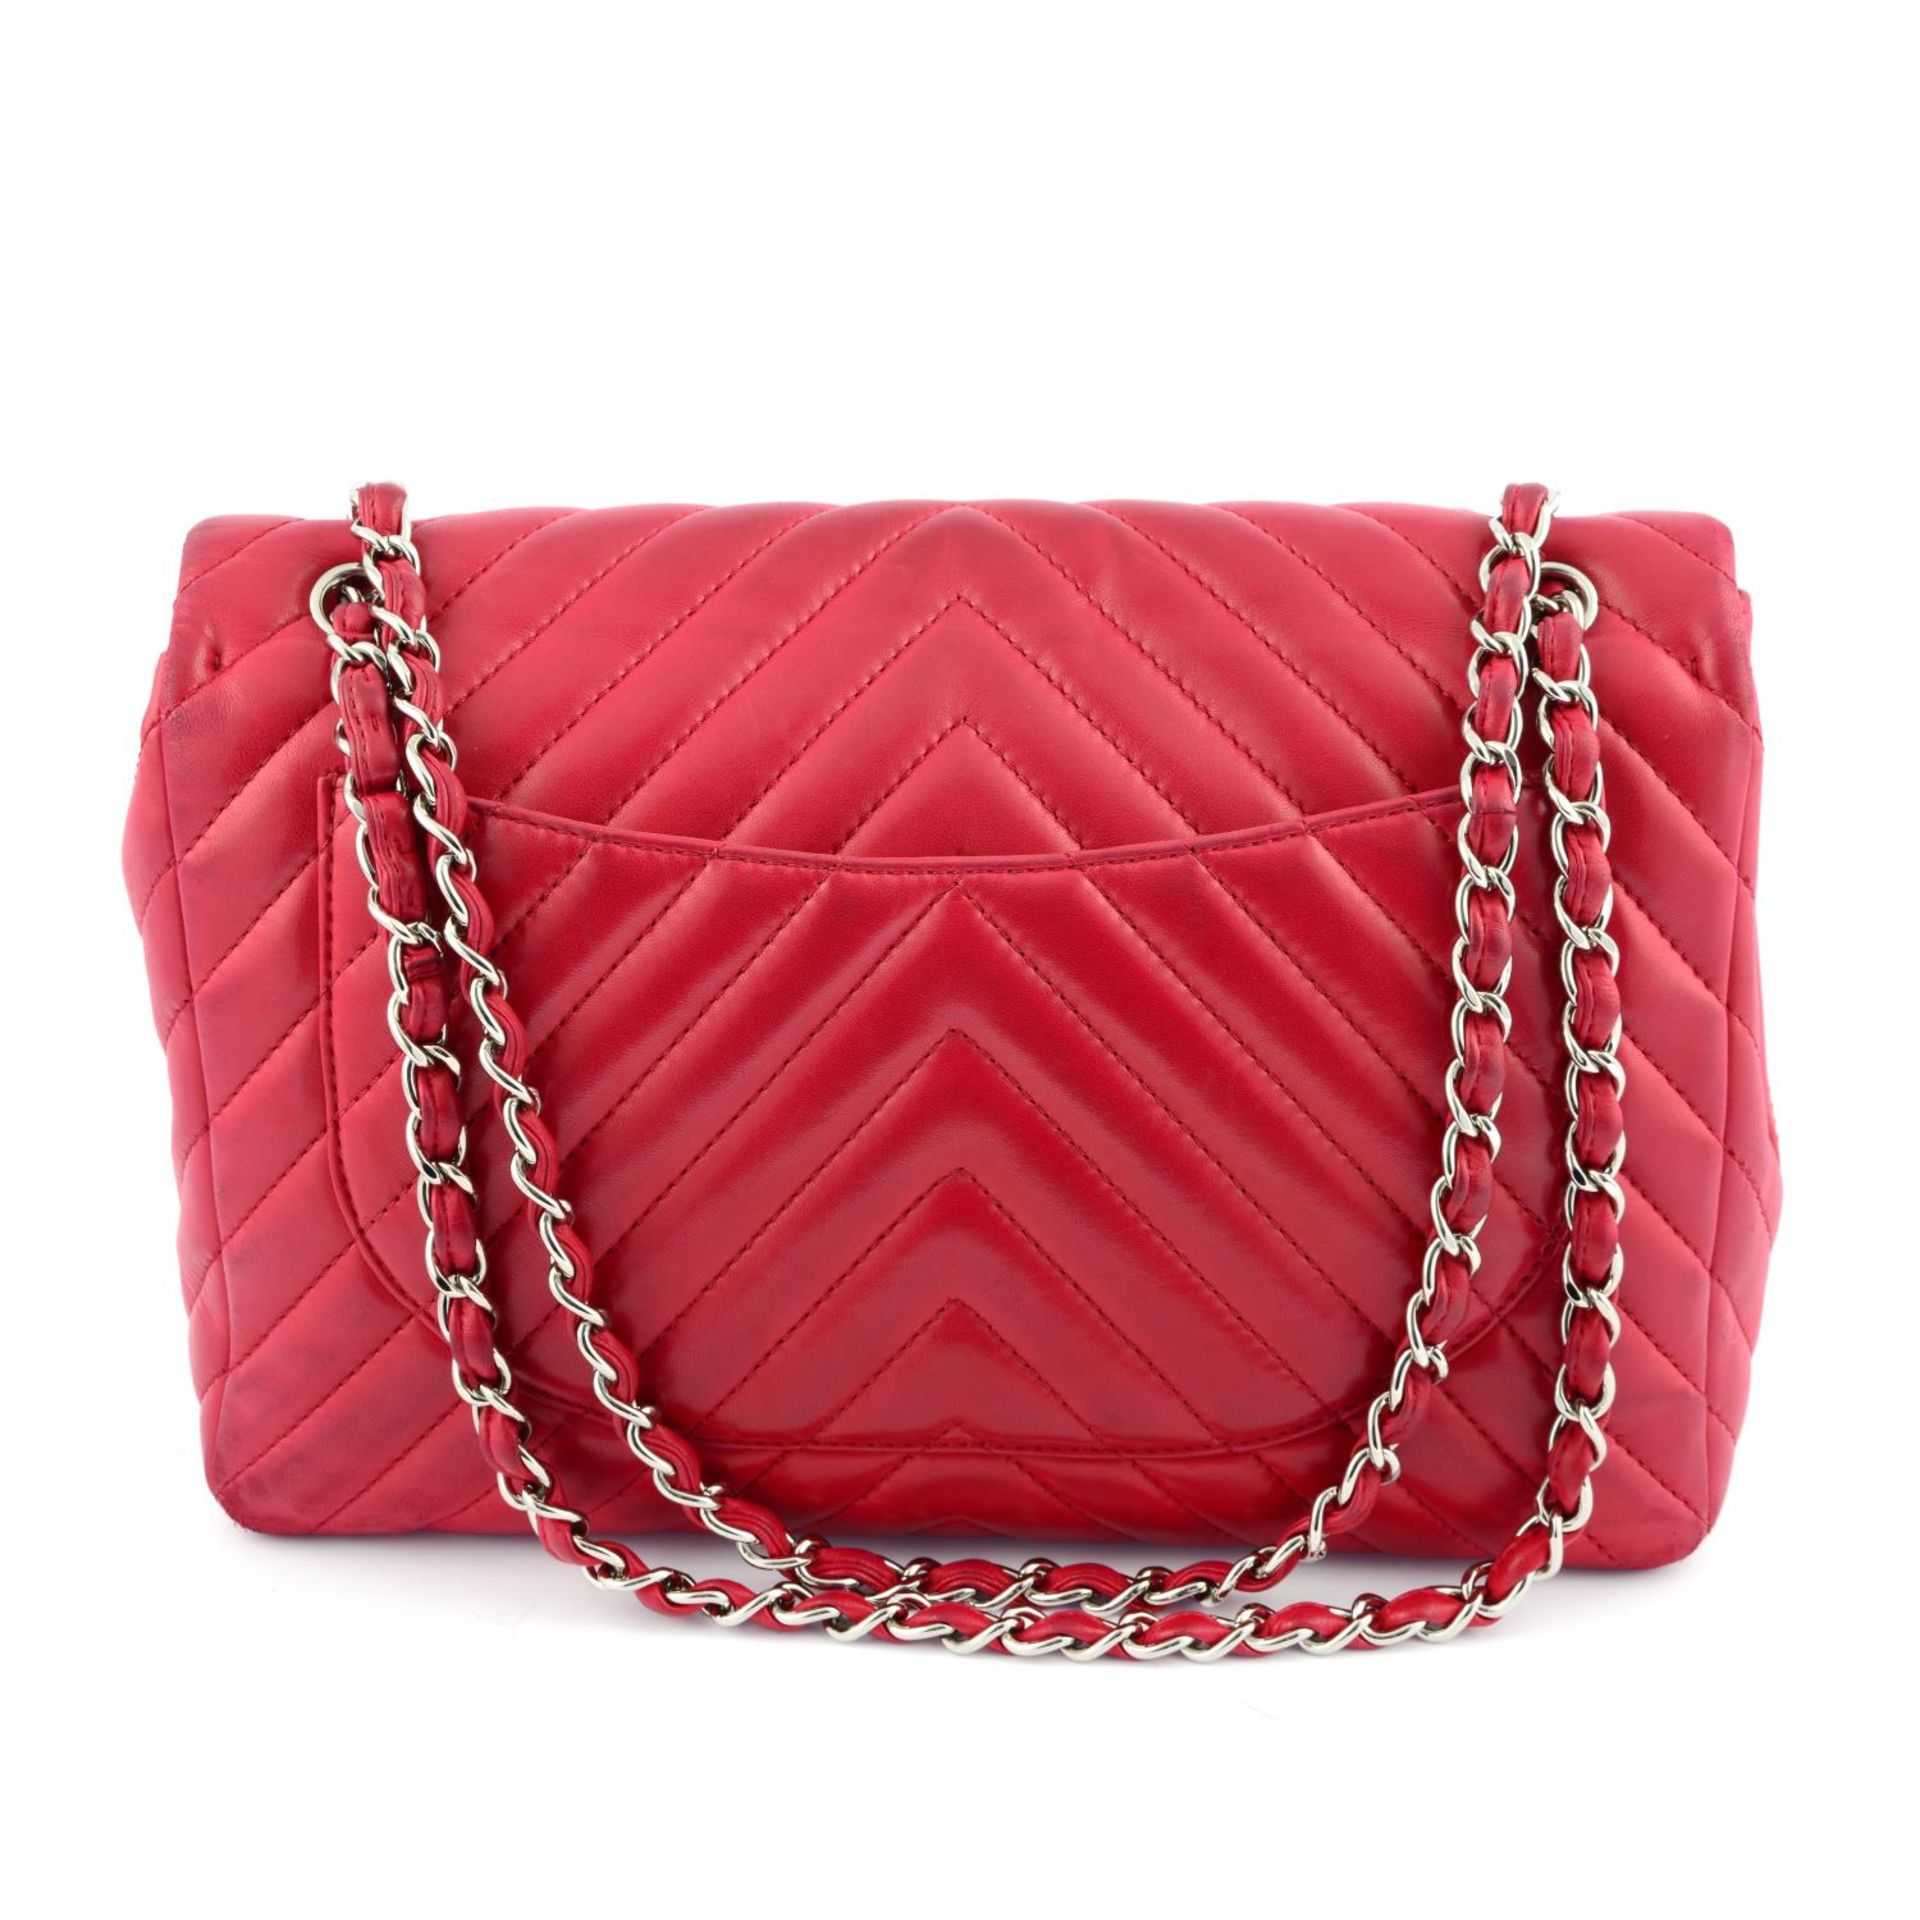 CHANEL - an amaranth red Maxi Classic Flap handbag. - Image 2 of 7